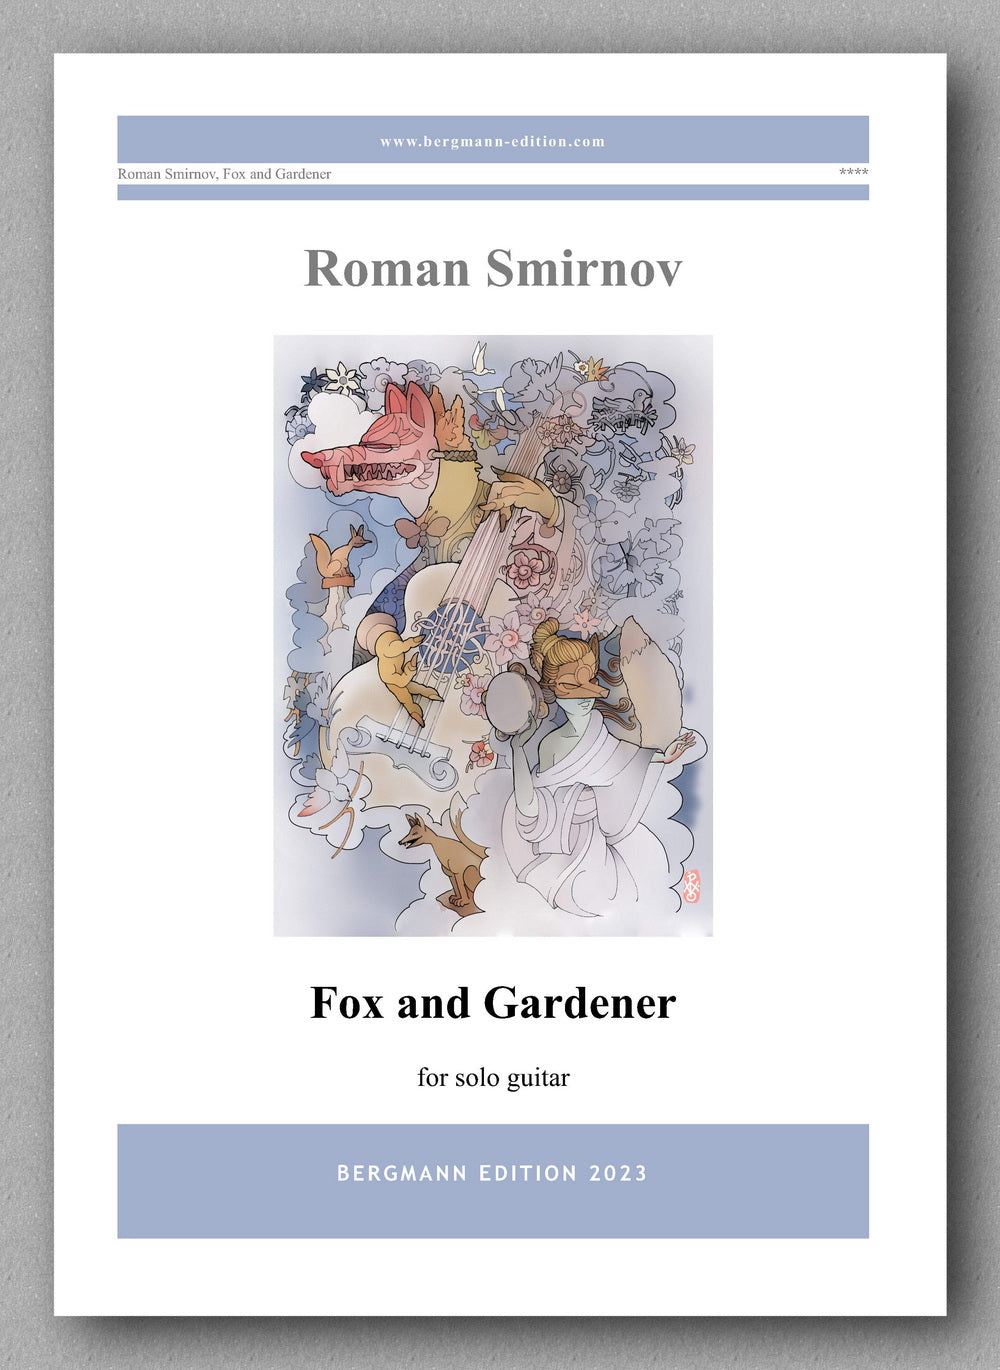 Roman Smirnov, Fox and Gardener - Preview of the cover